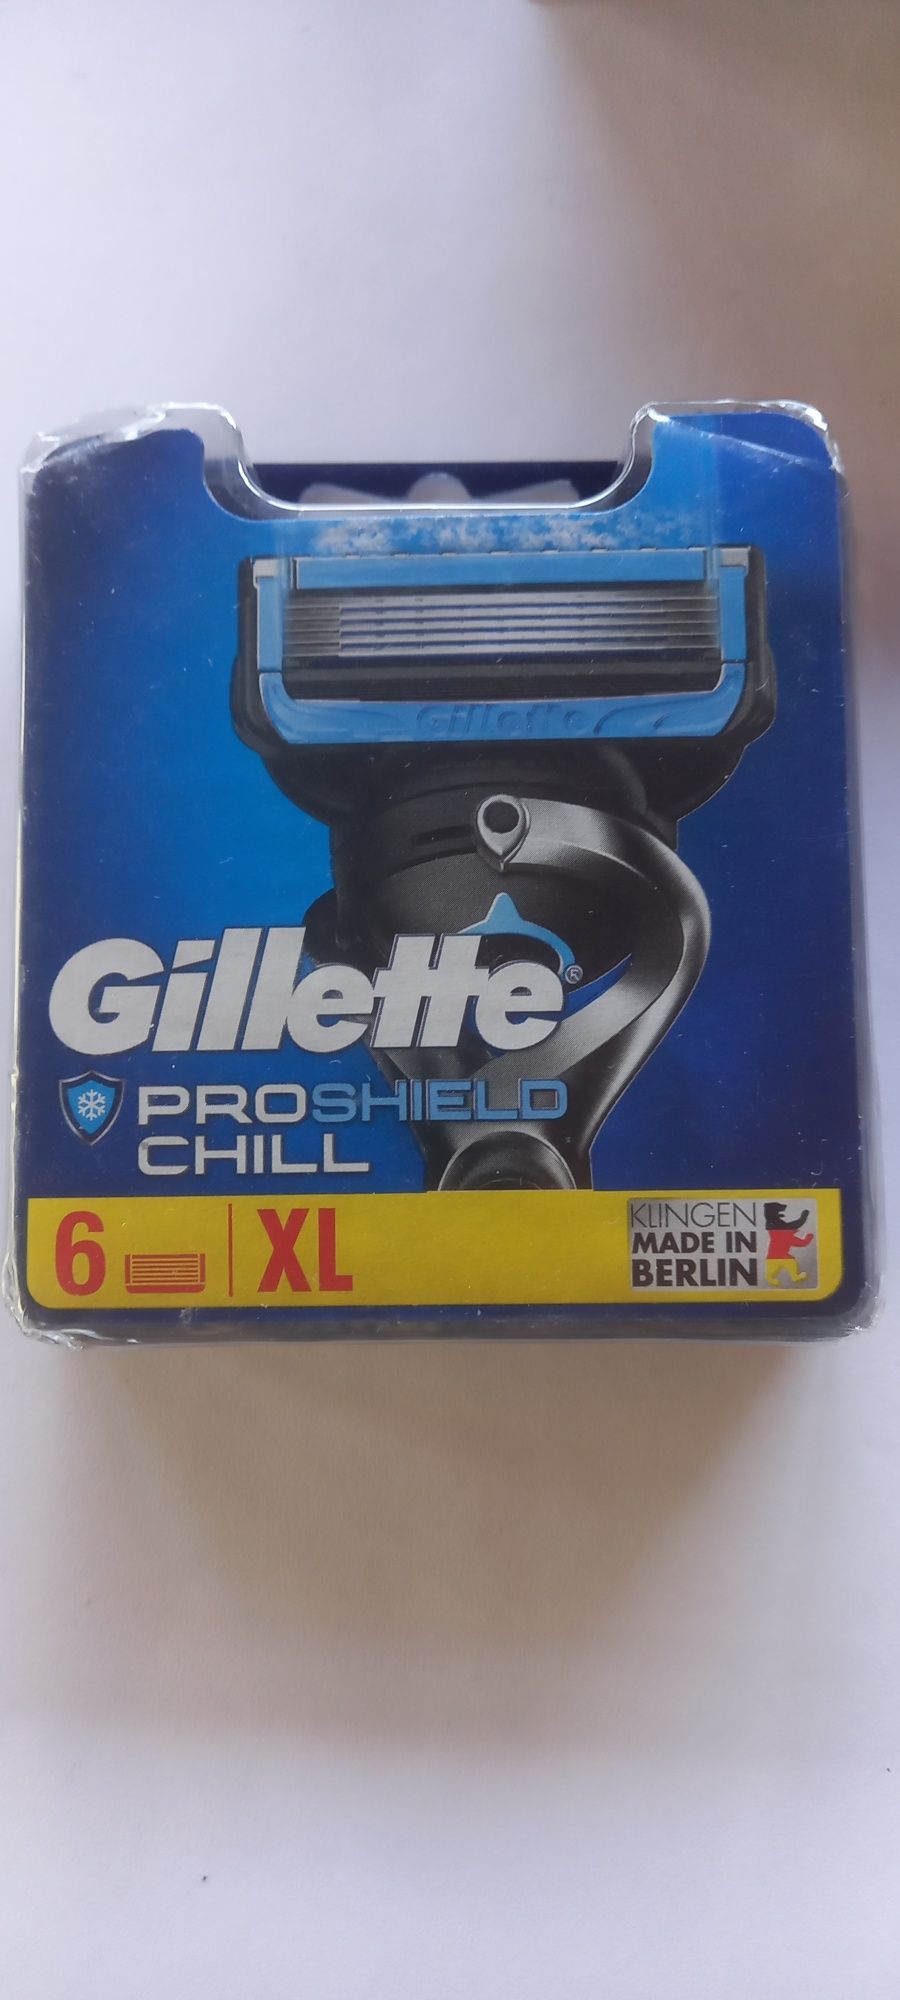 Gillette Proshield Chili 6 катріджа